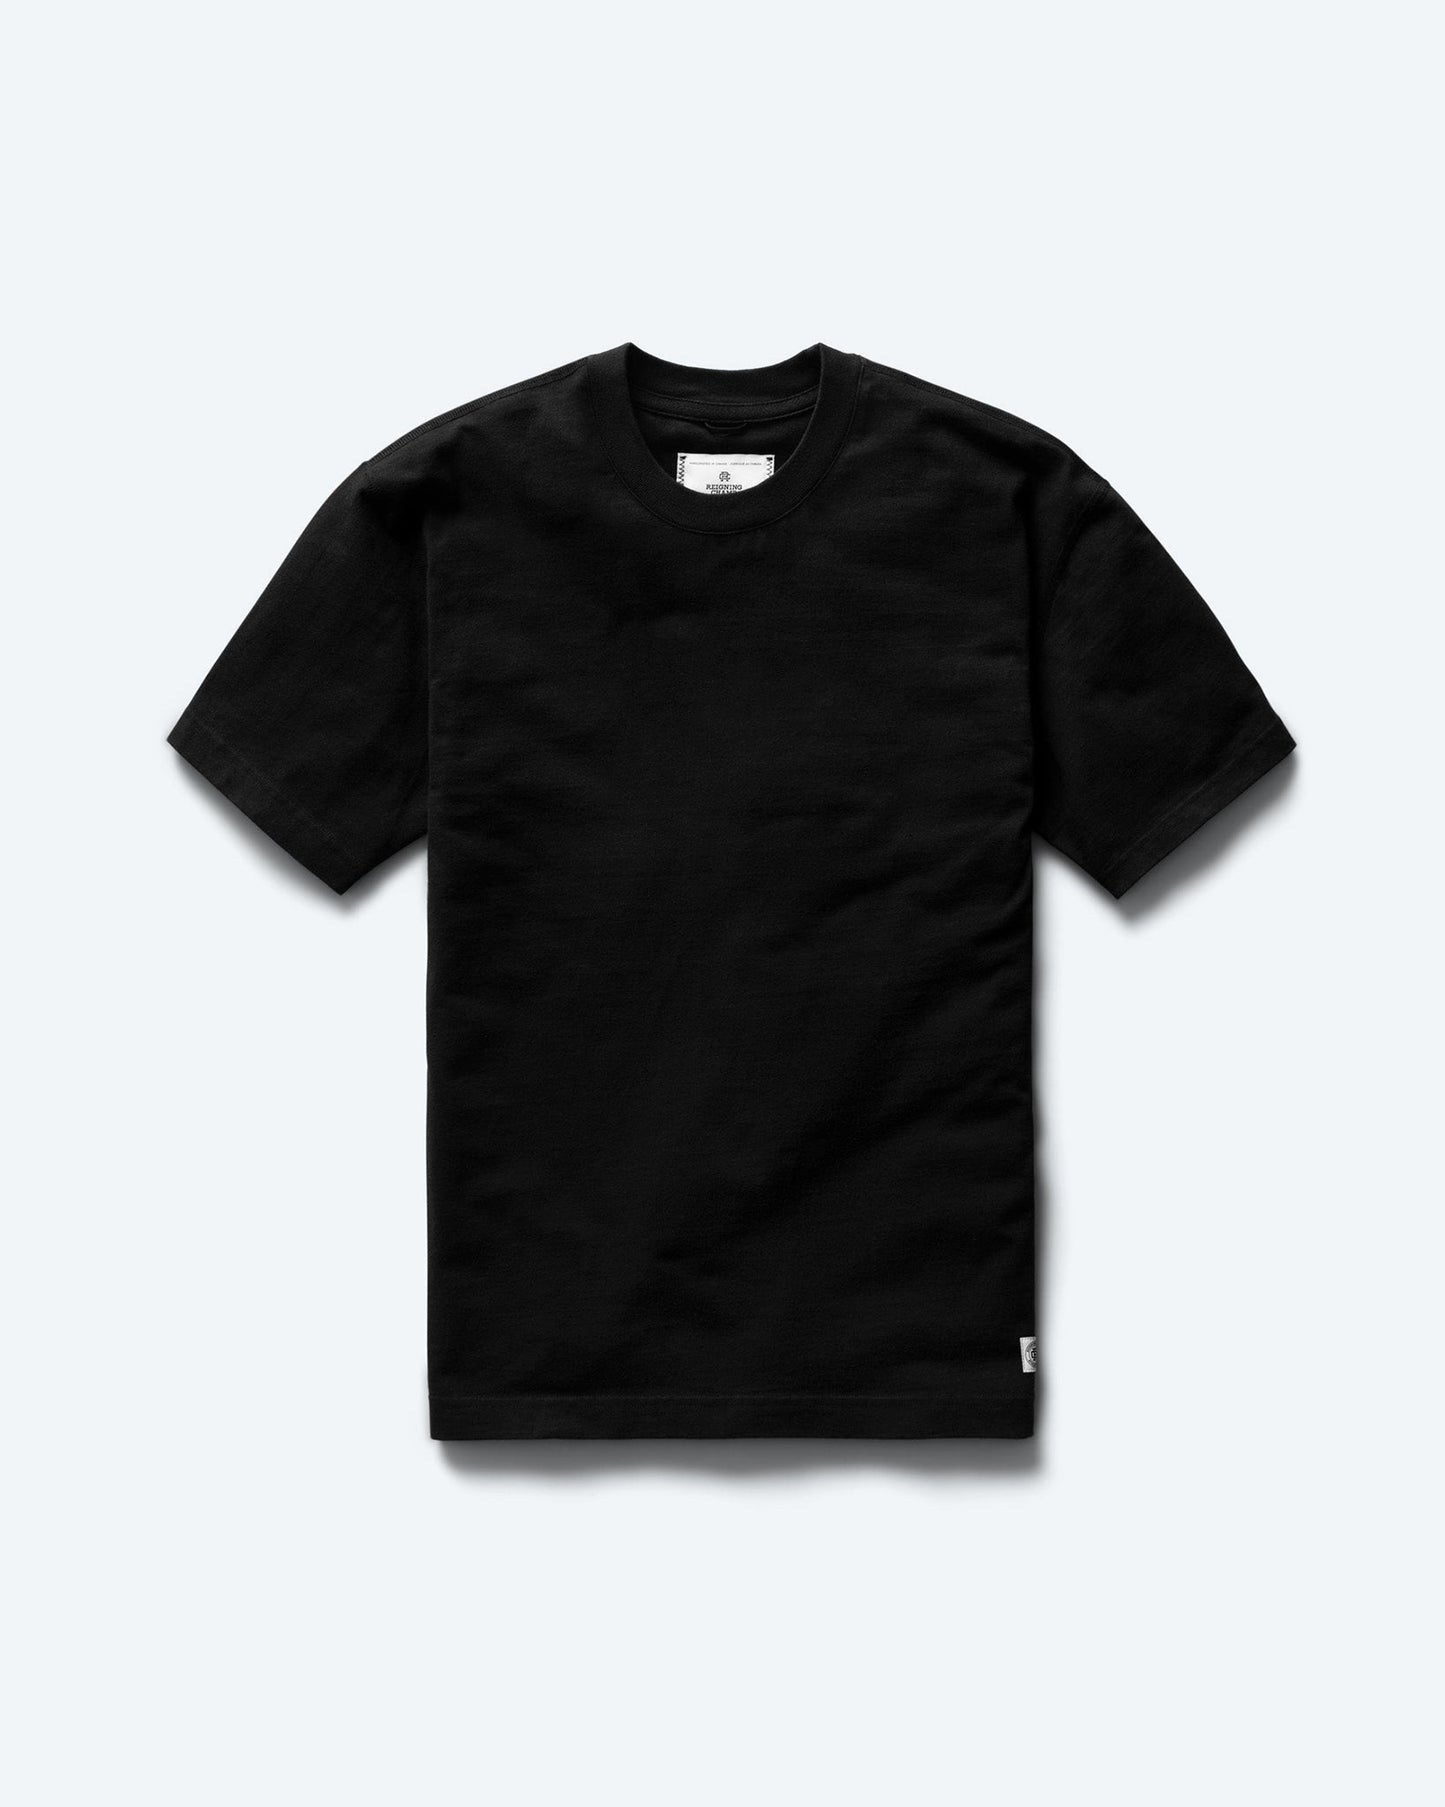 V-neck shirt Serie Dry Cotton Colour black